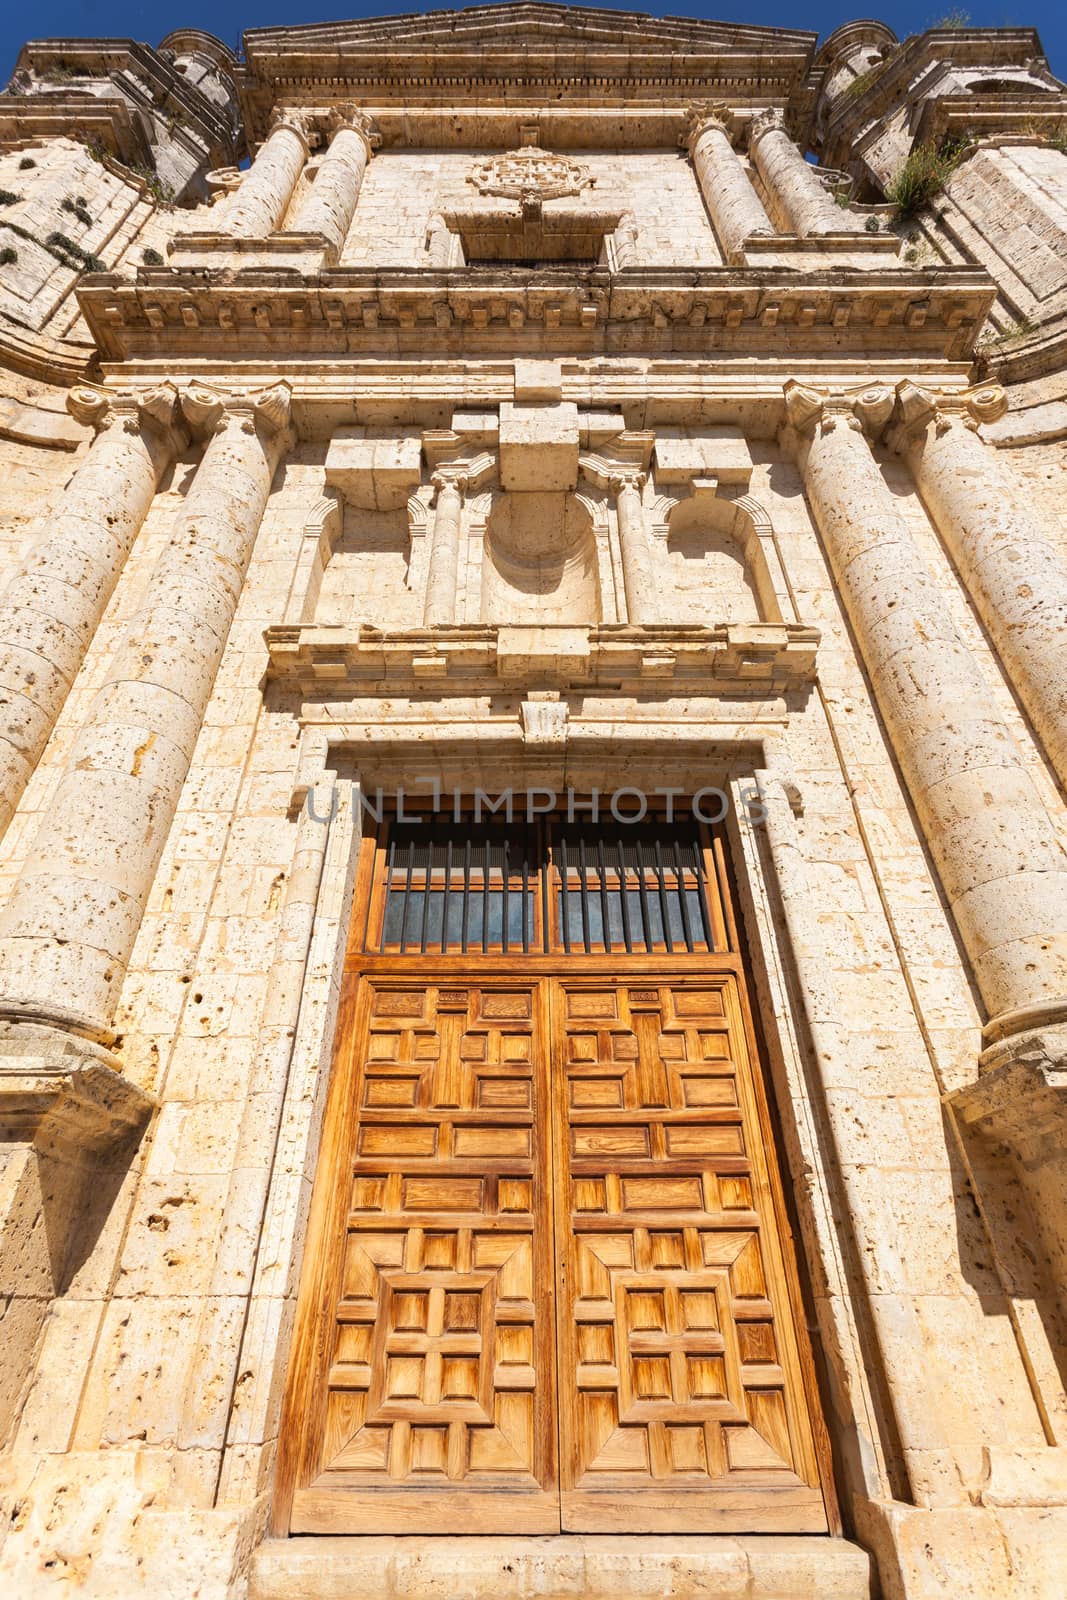 Impressive entrance door in Monastery of the Santa Espina by imagsan